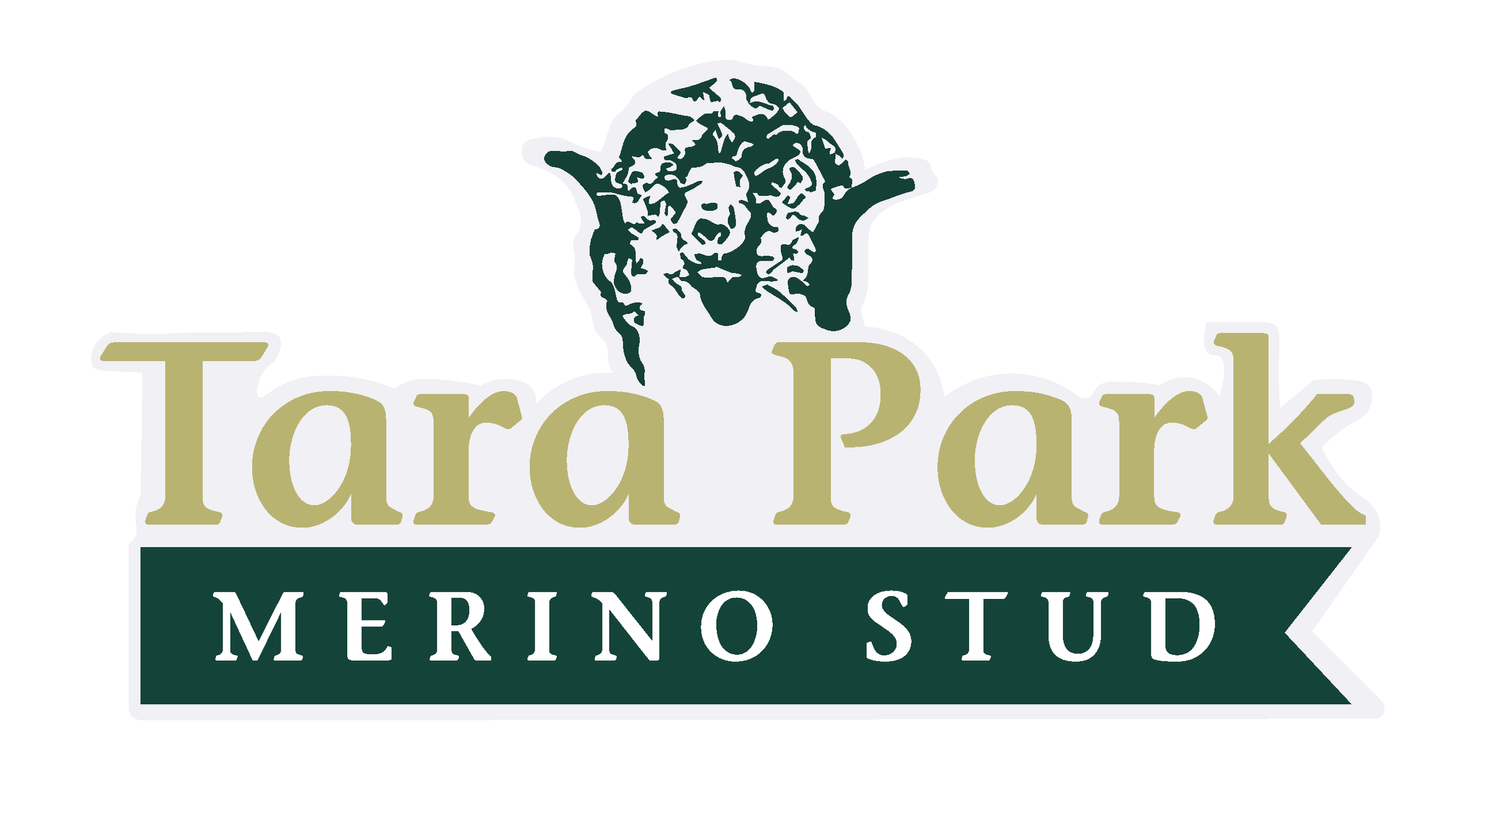 Tara Park Merino Stud